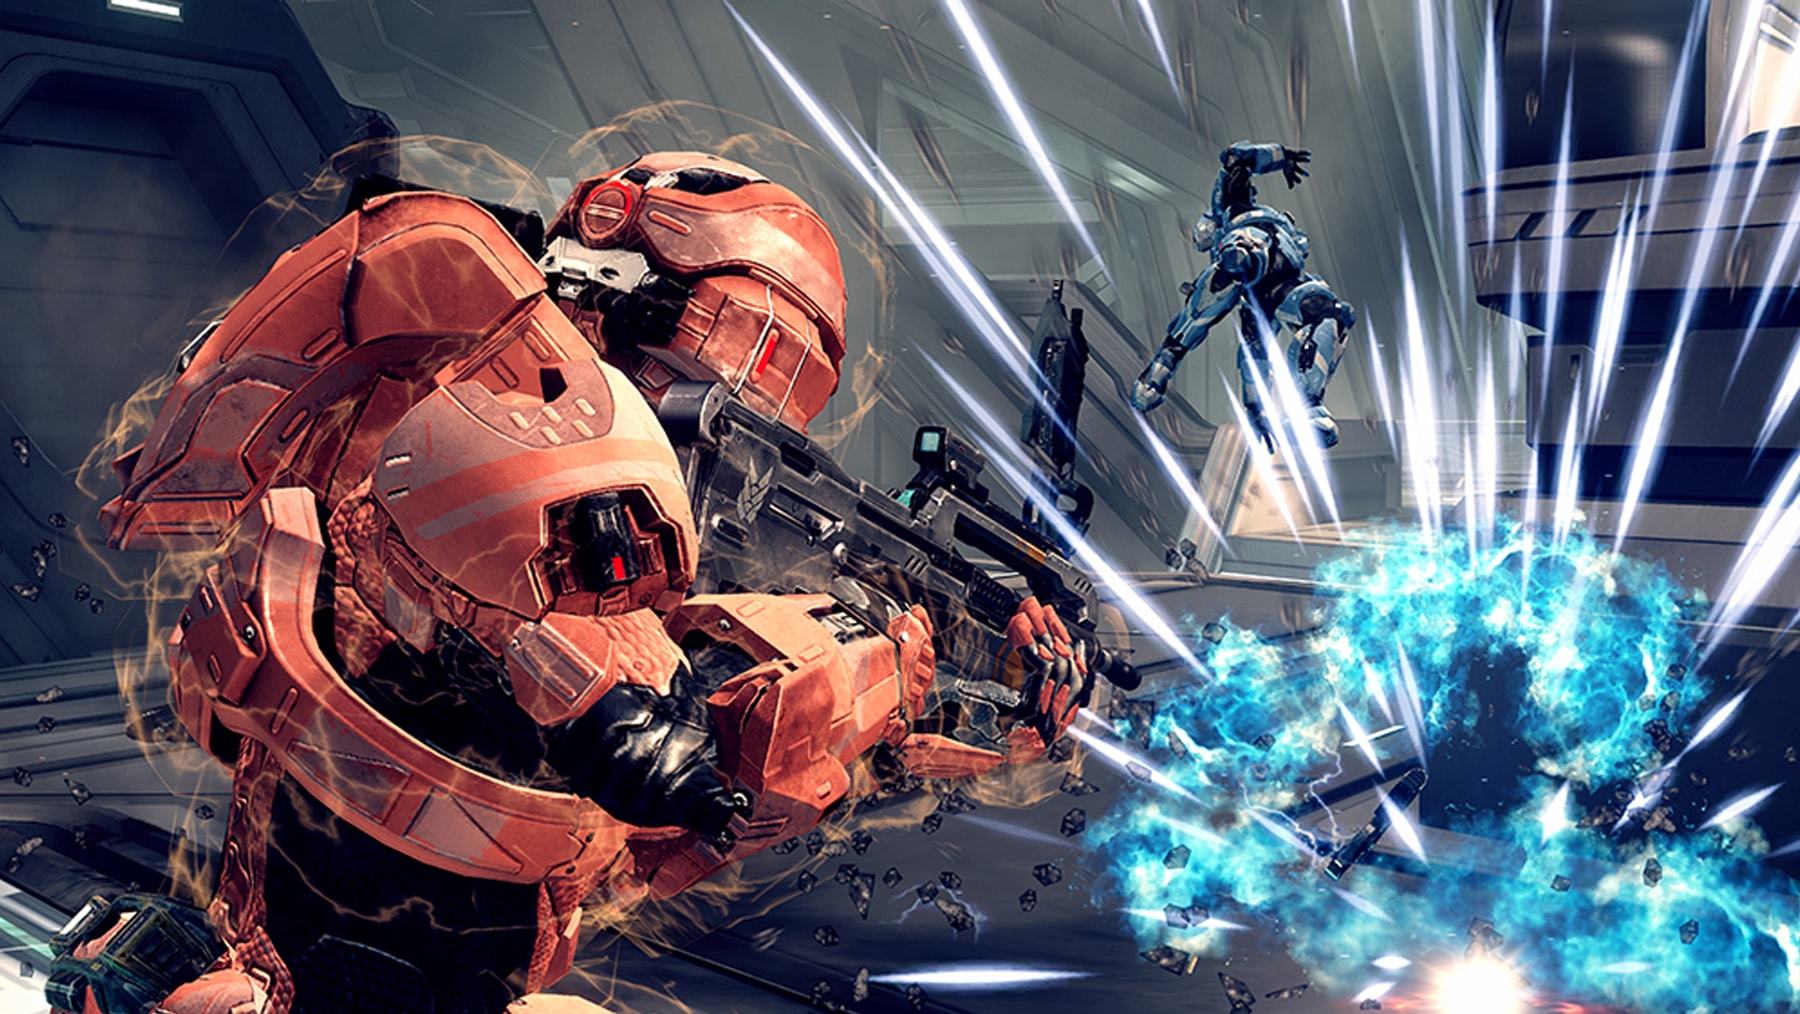 Illustration of a fierce battle from Halo 4